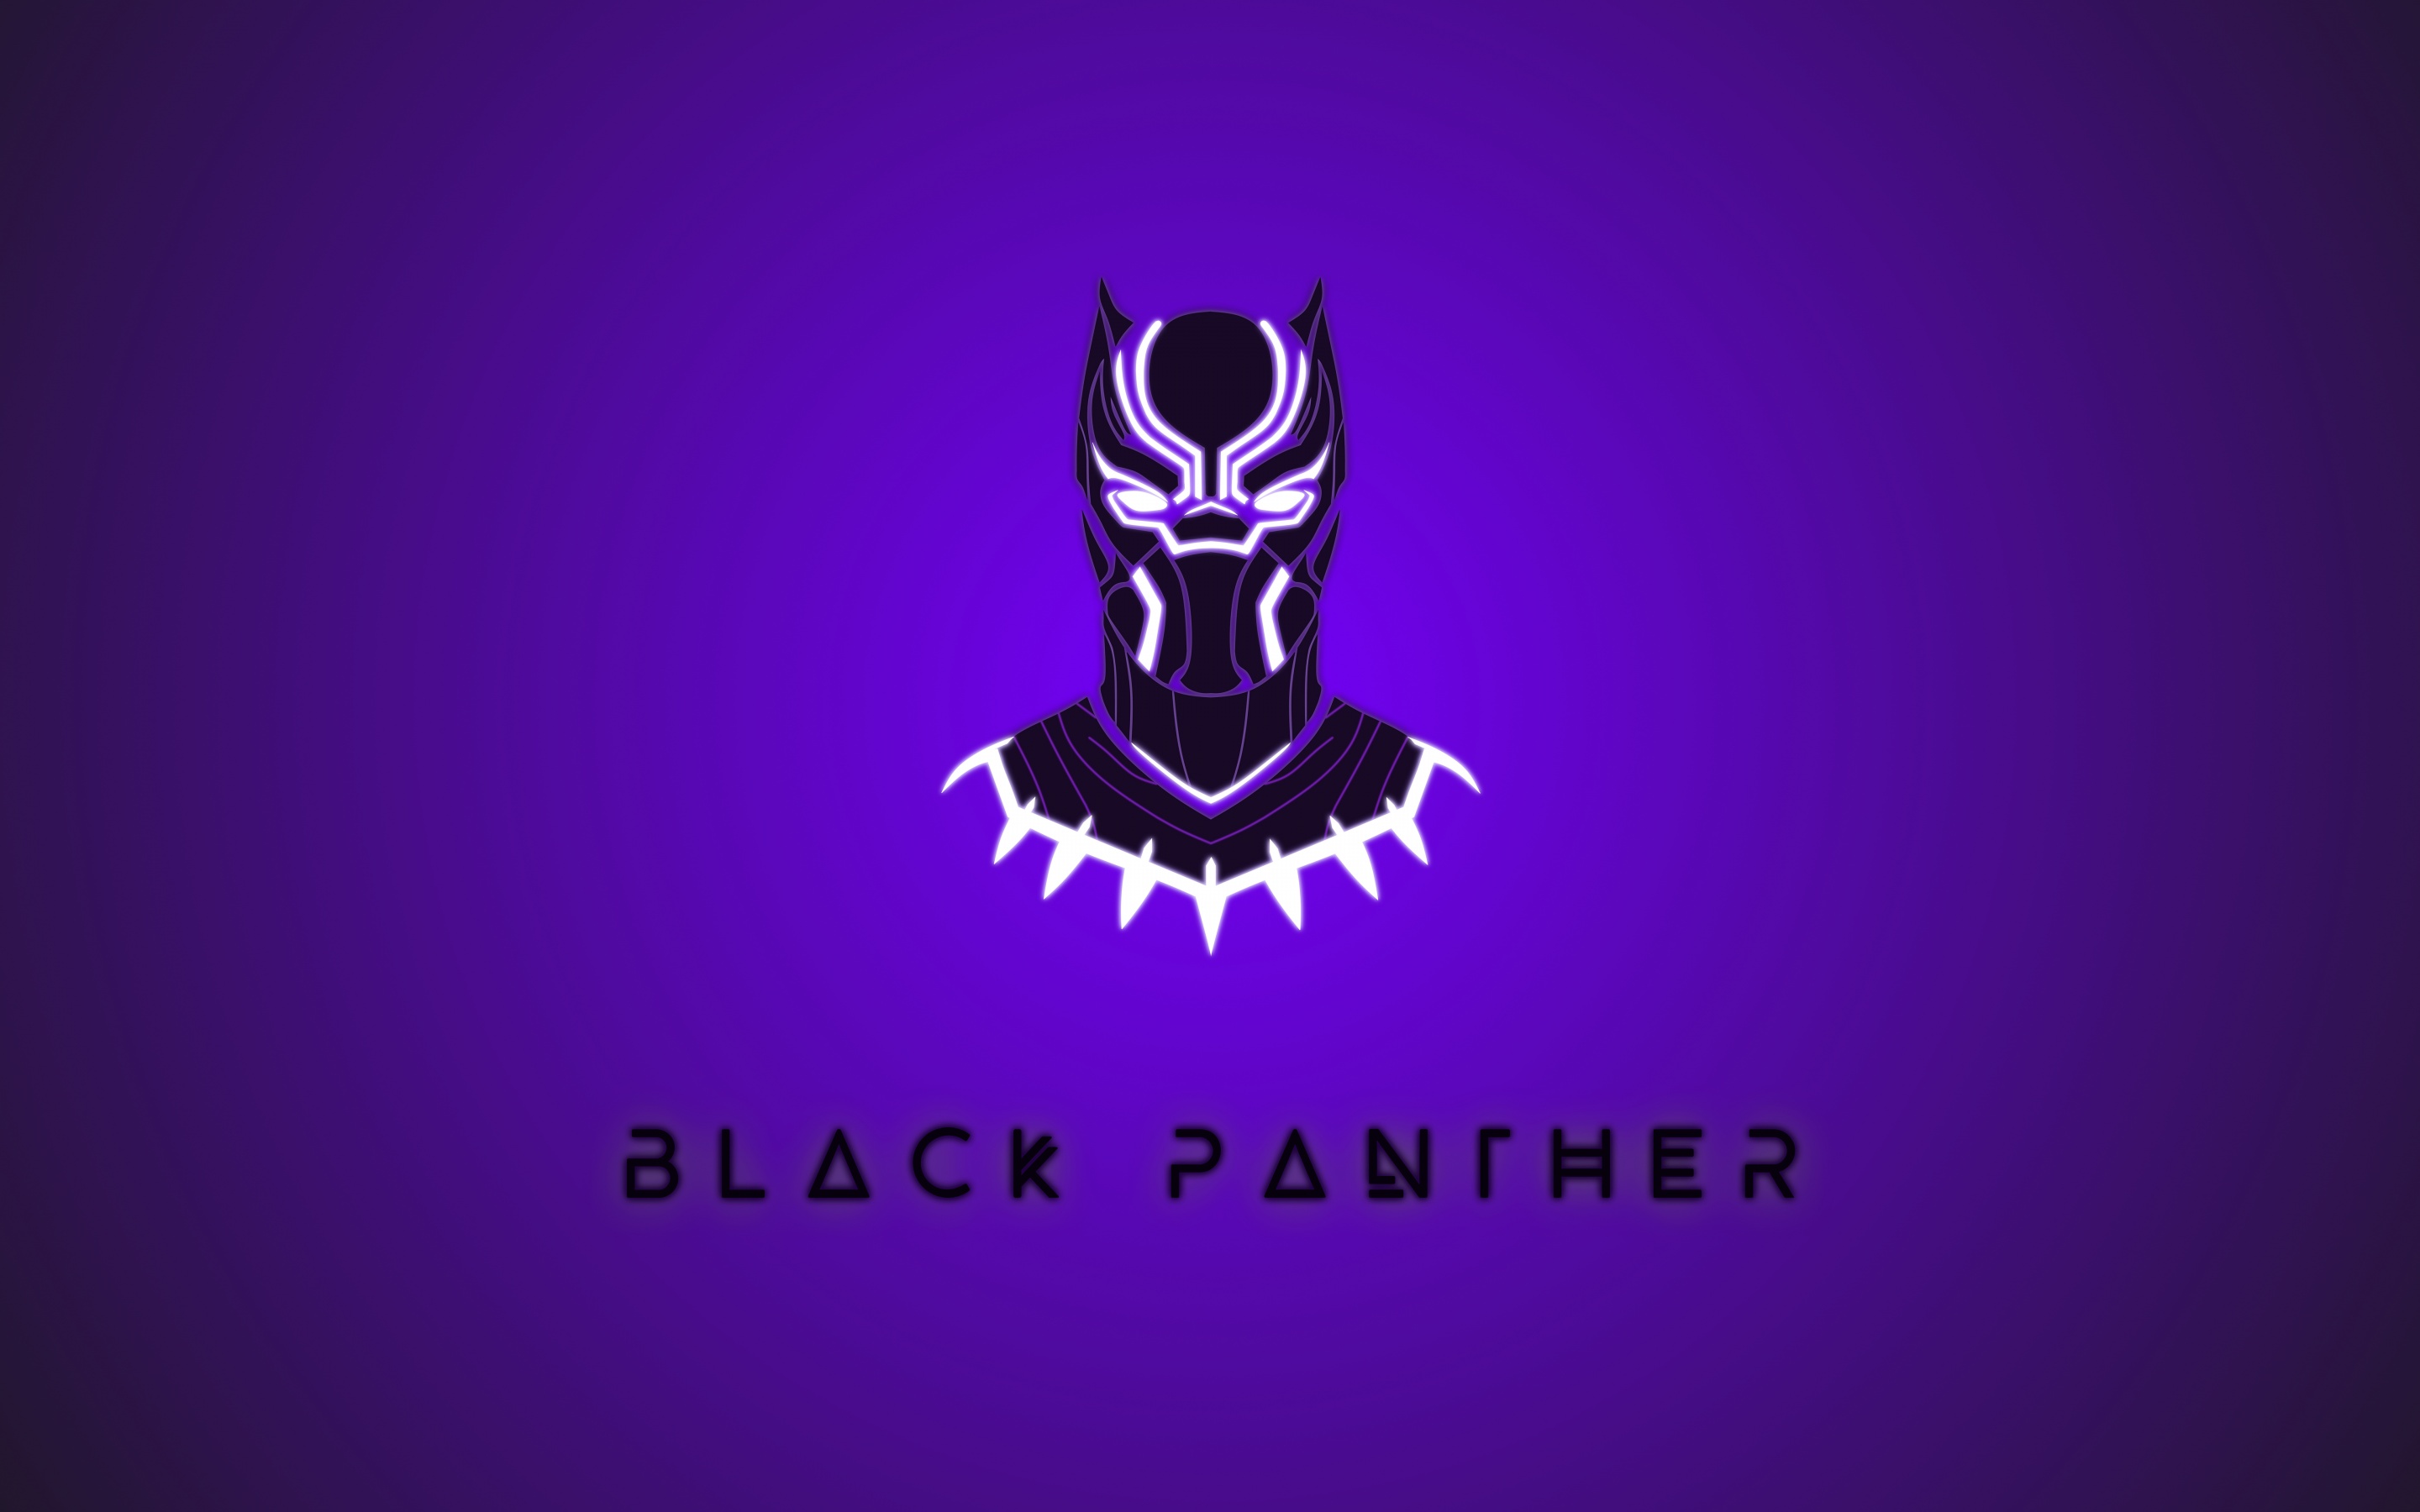 Black Panther 4K Wallpaper, Minimal art, Marvel Superheroes, Purple